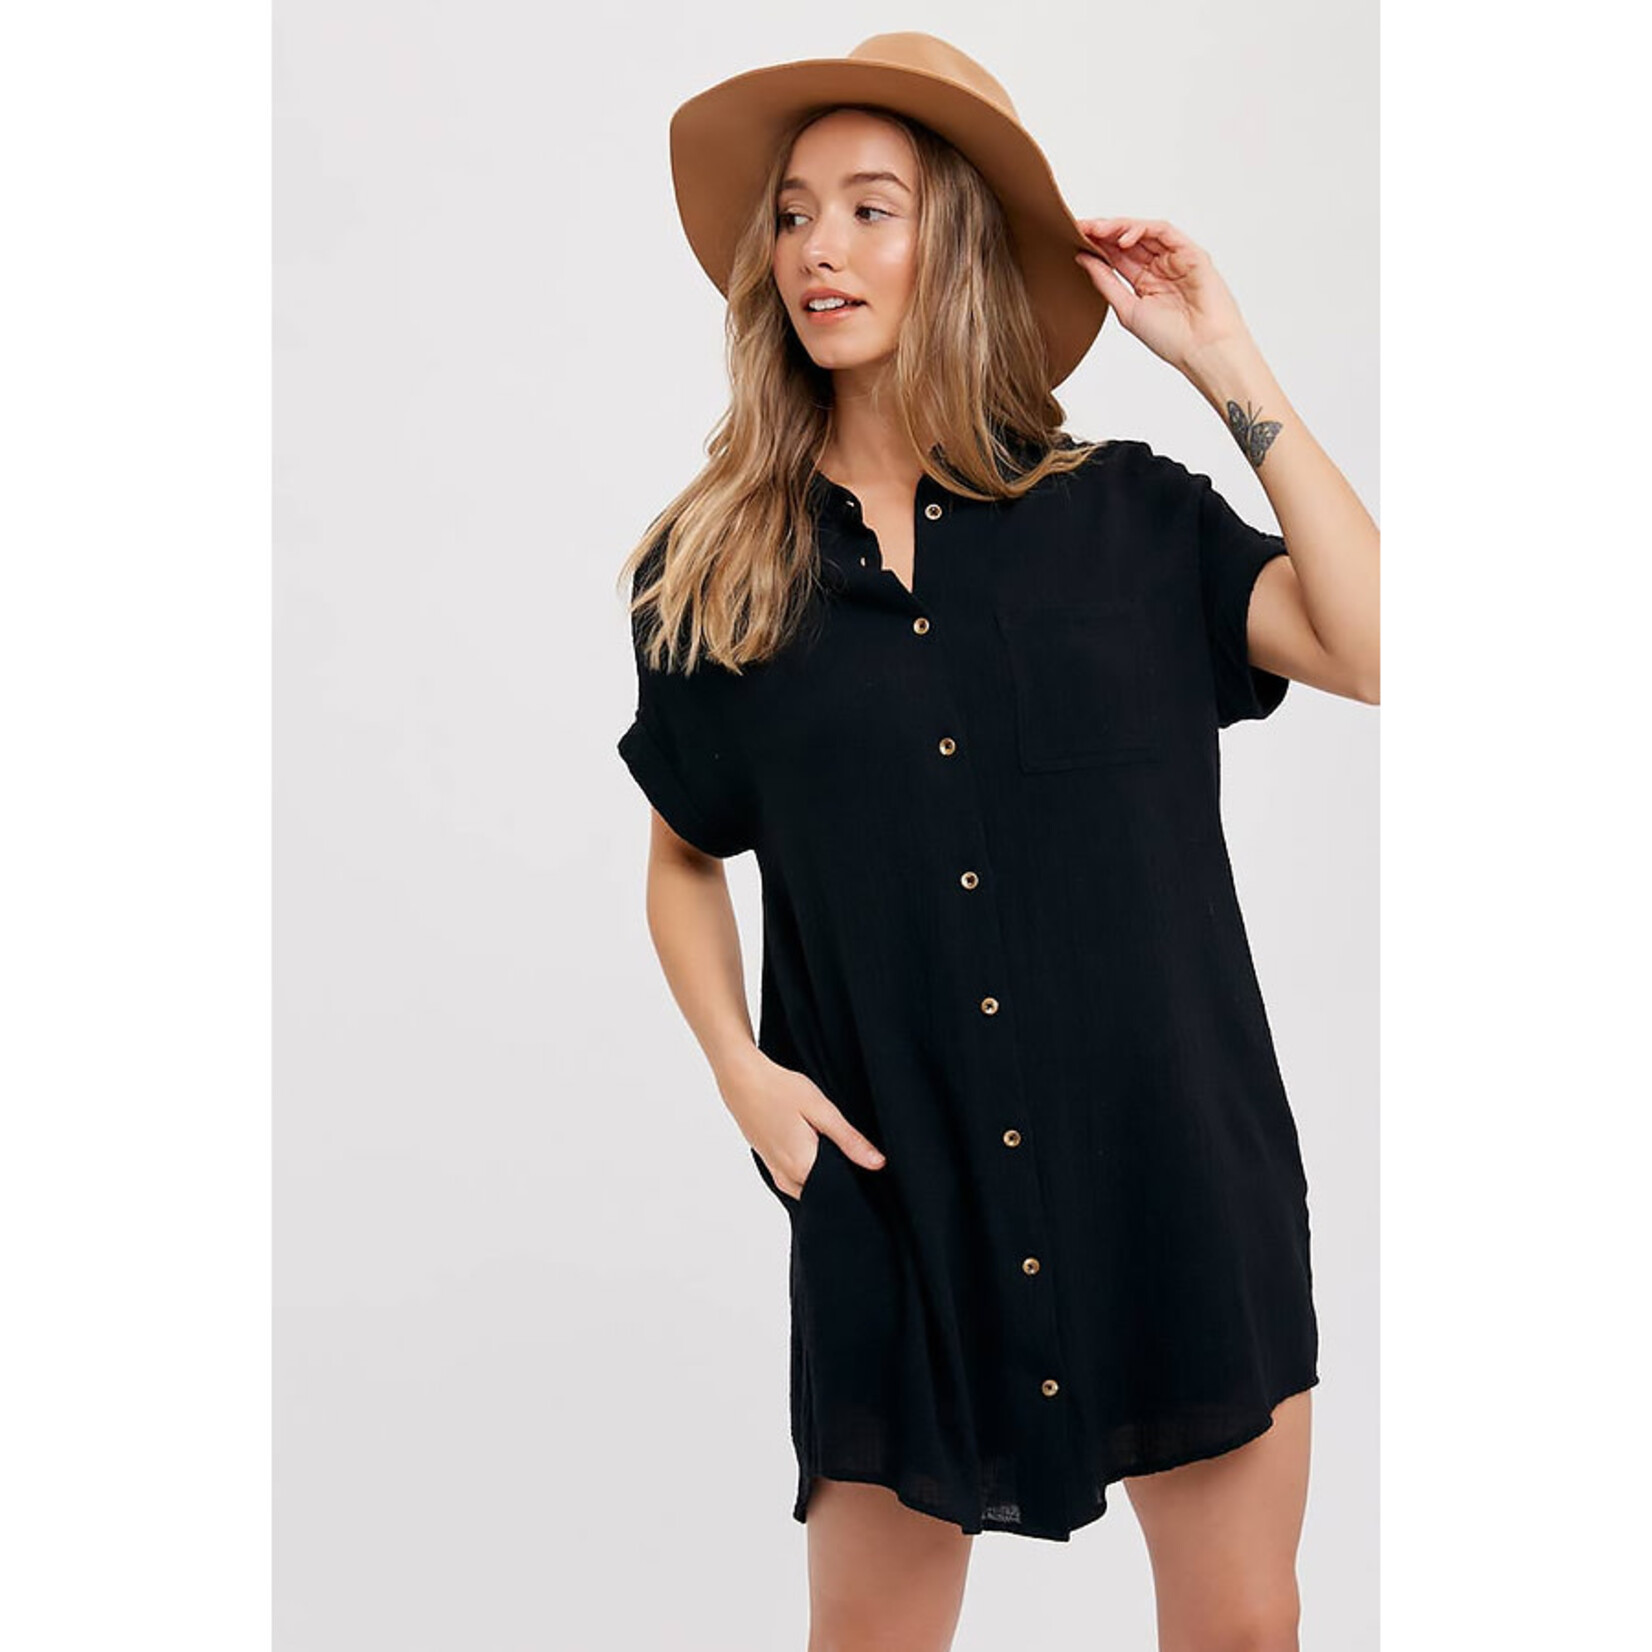 Bluivy Sandy Shores Button Up Shirt Dress